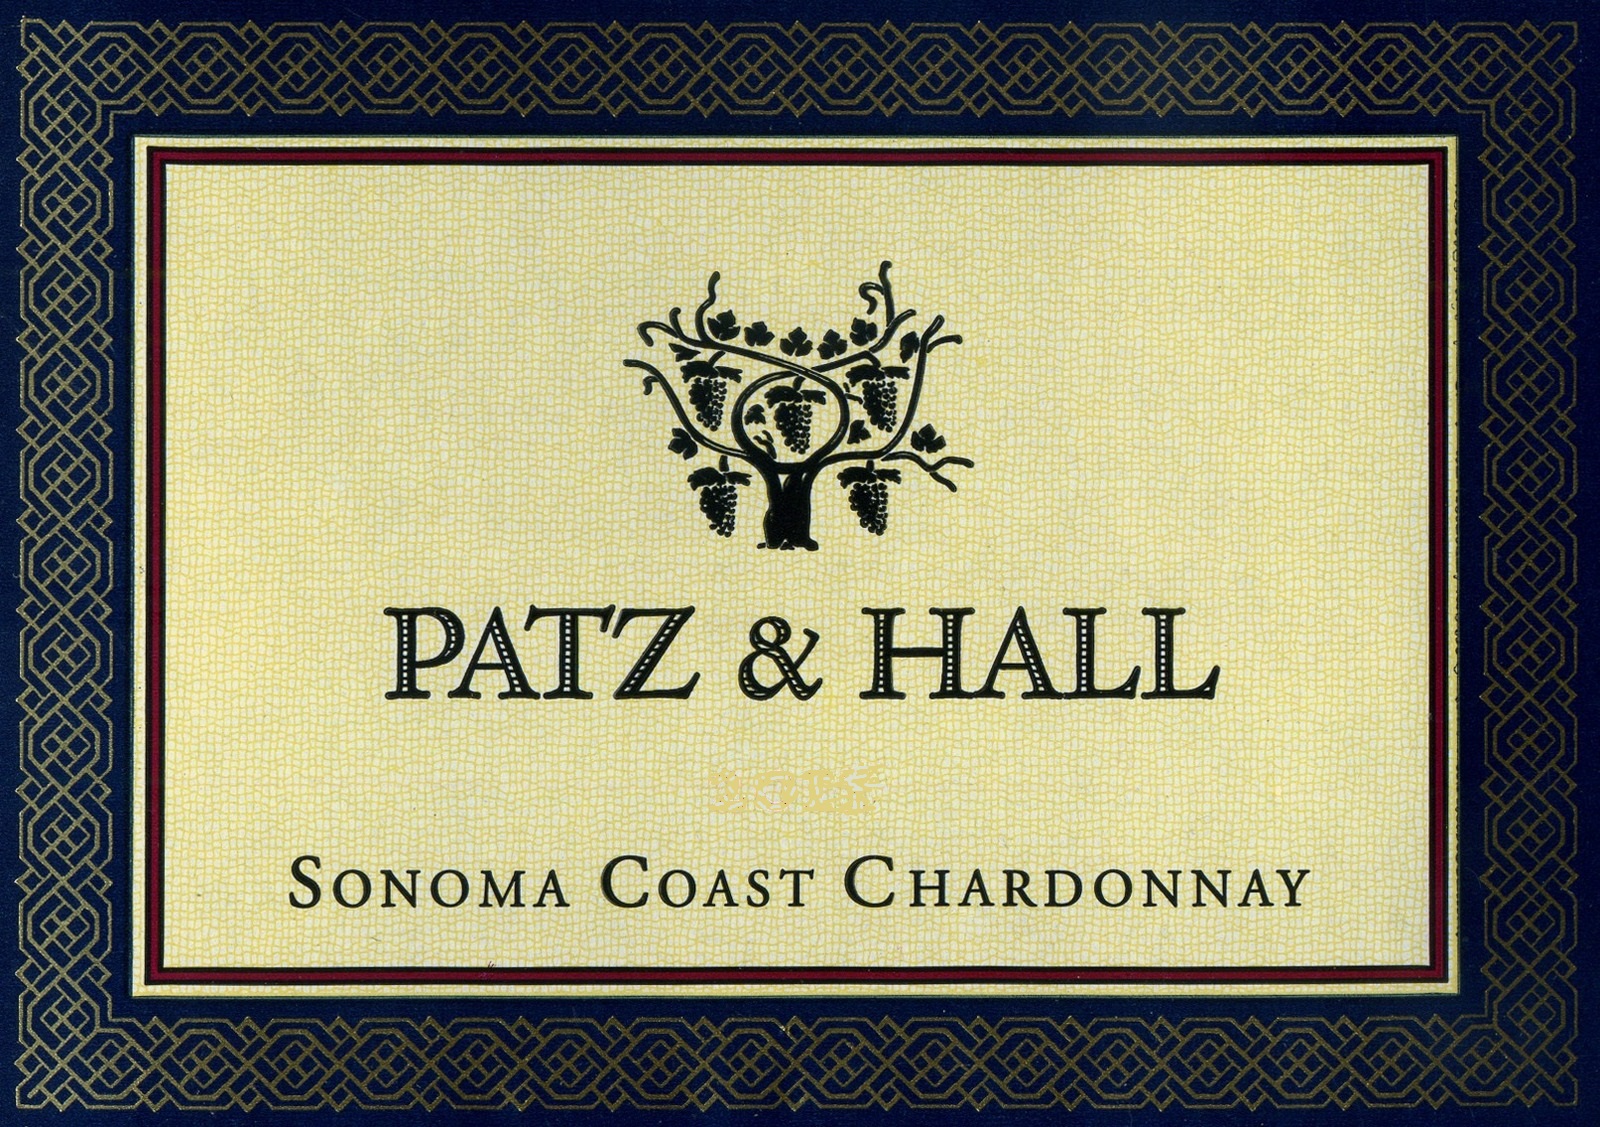 2018 Patz and Hall Sonoma Coast Chardonnay - click image for full description